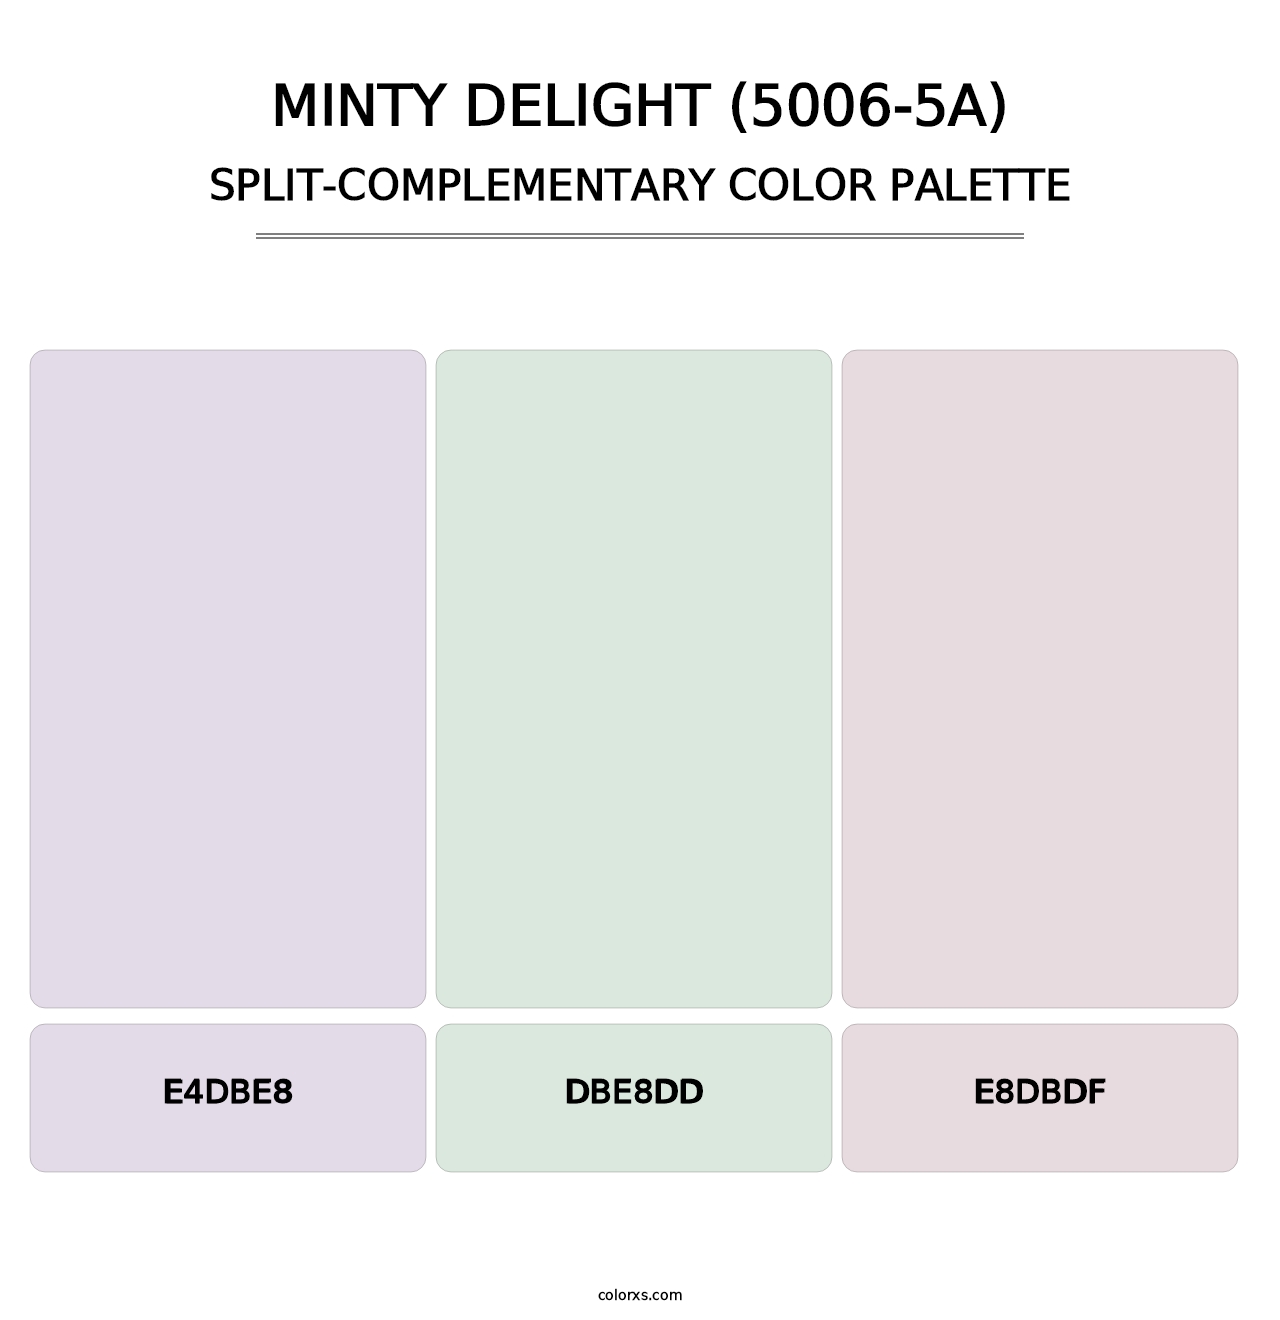 Minty Delight (5006-5A) - Split-Complementary Color Palette